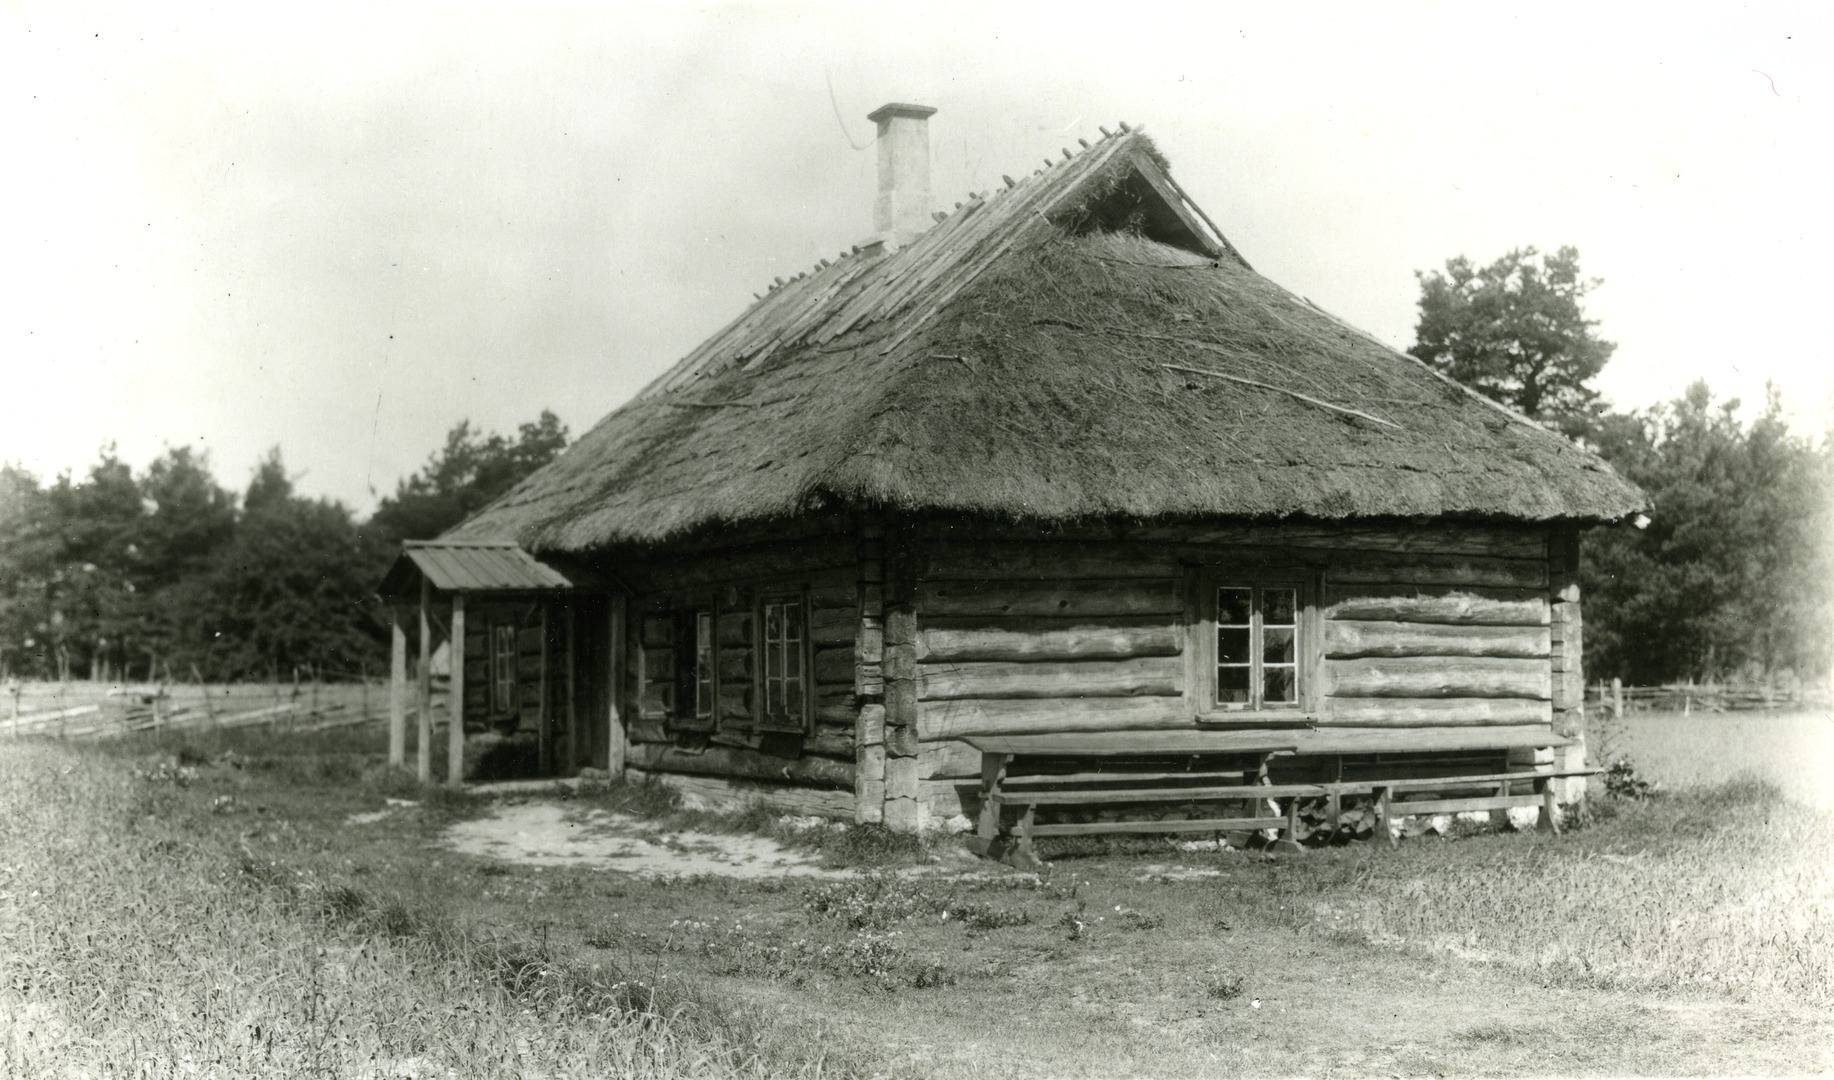 Laugu School House in Saaremaa Liiva village